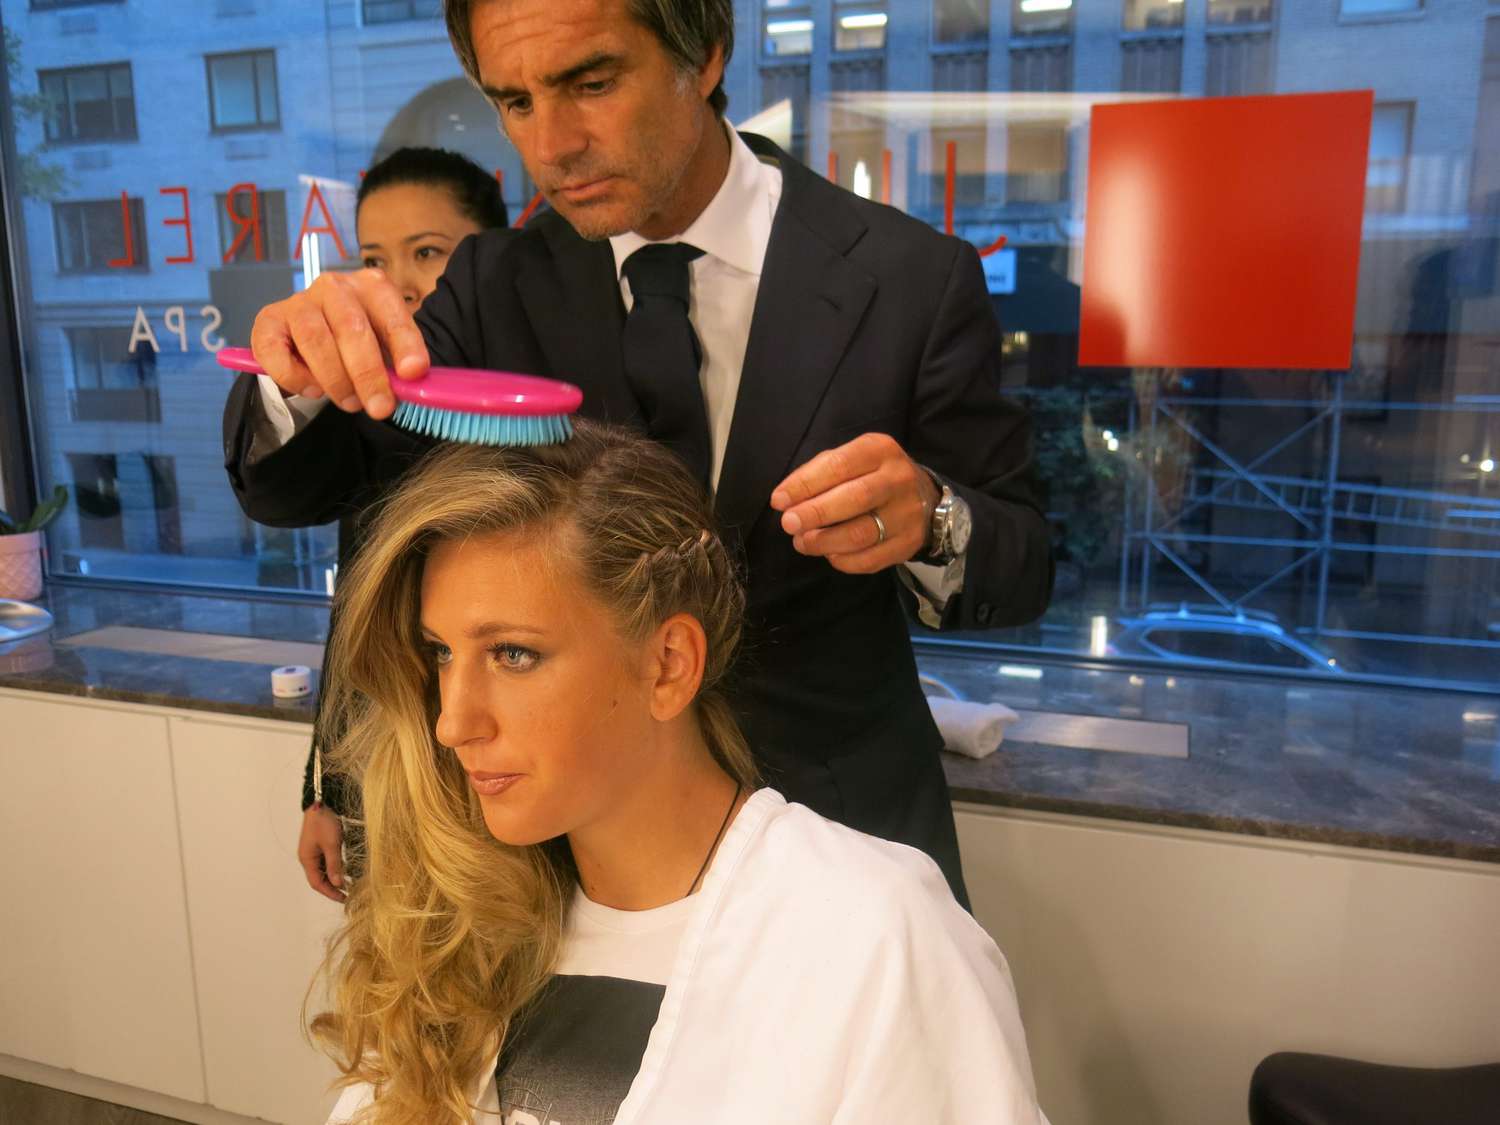 US Open hairstylist Julien Farel shares wedding hair tips